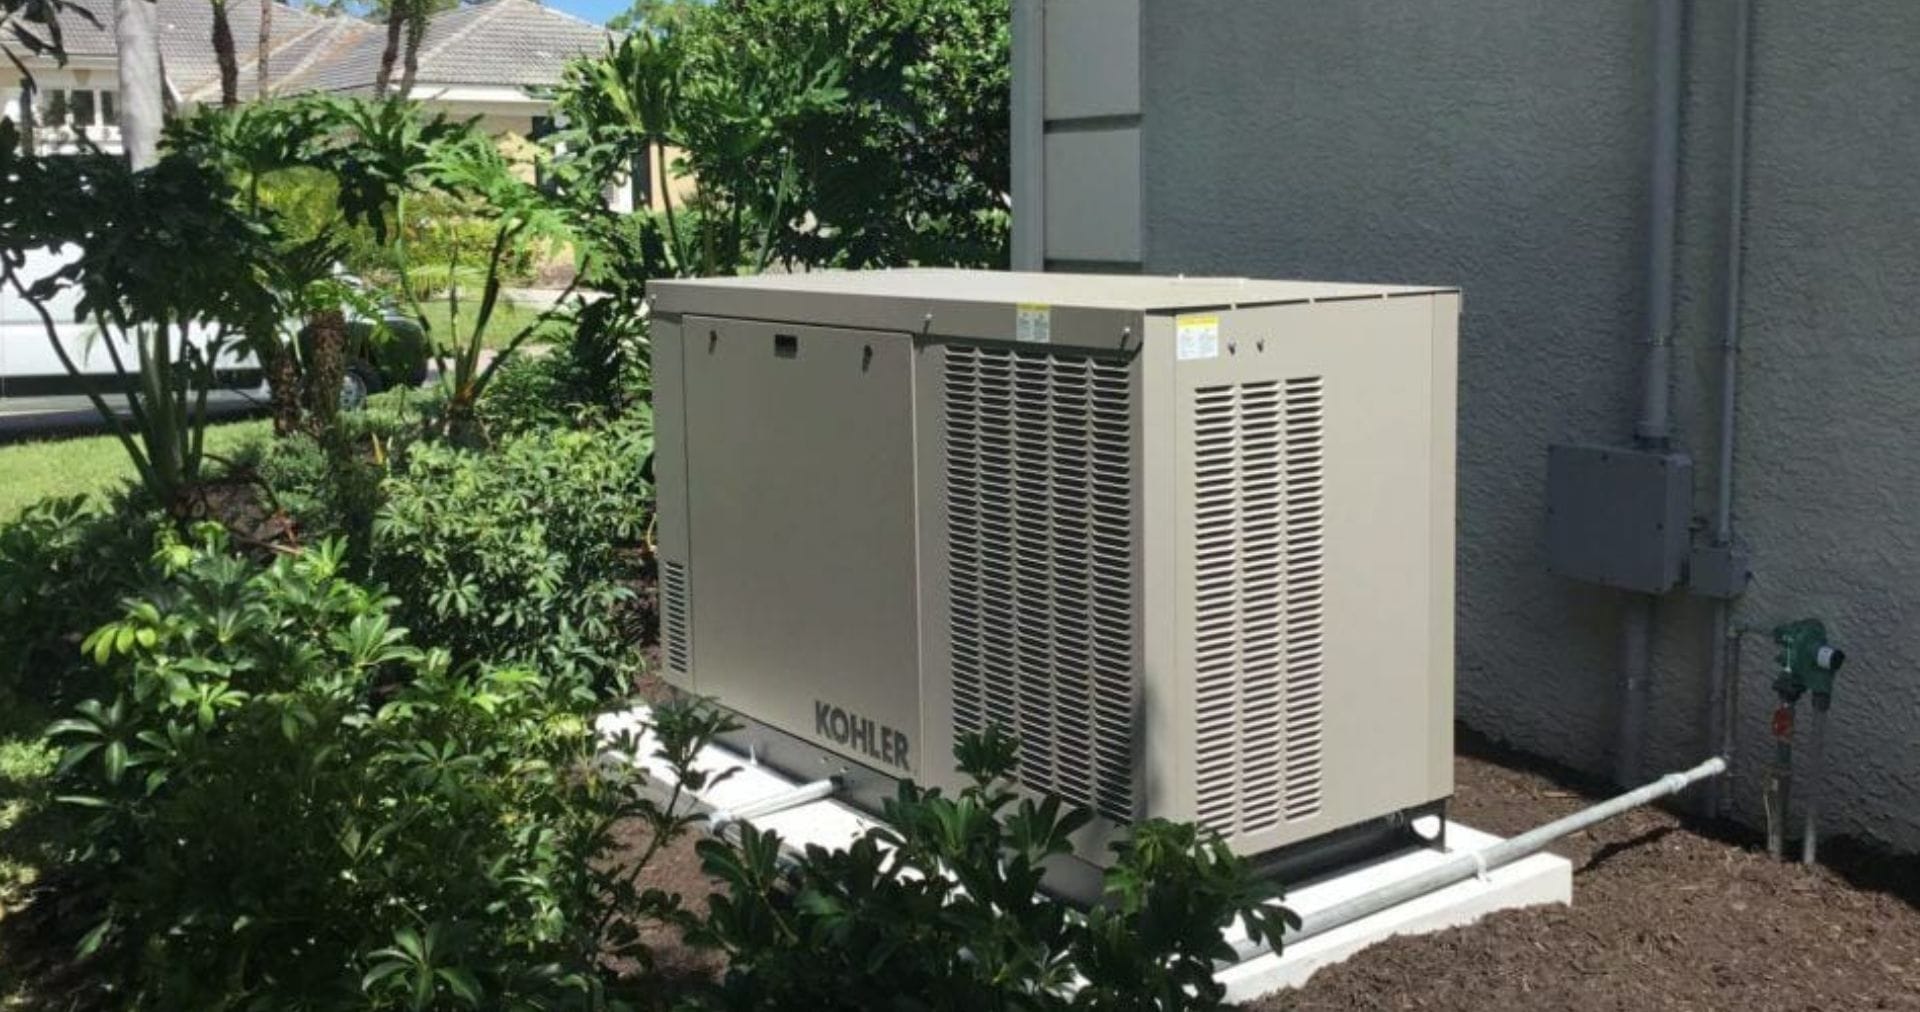 Kohler whole home generator Bonita Springs FL